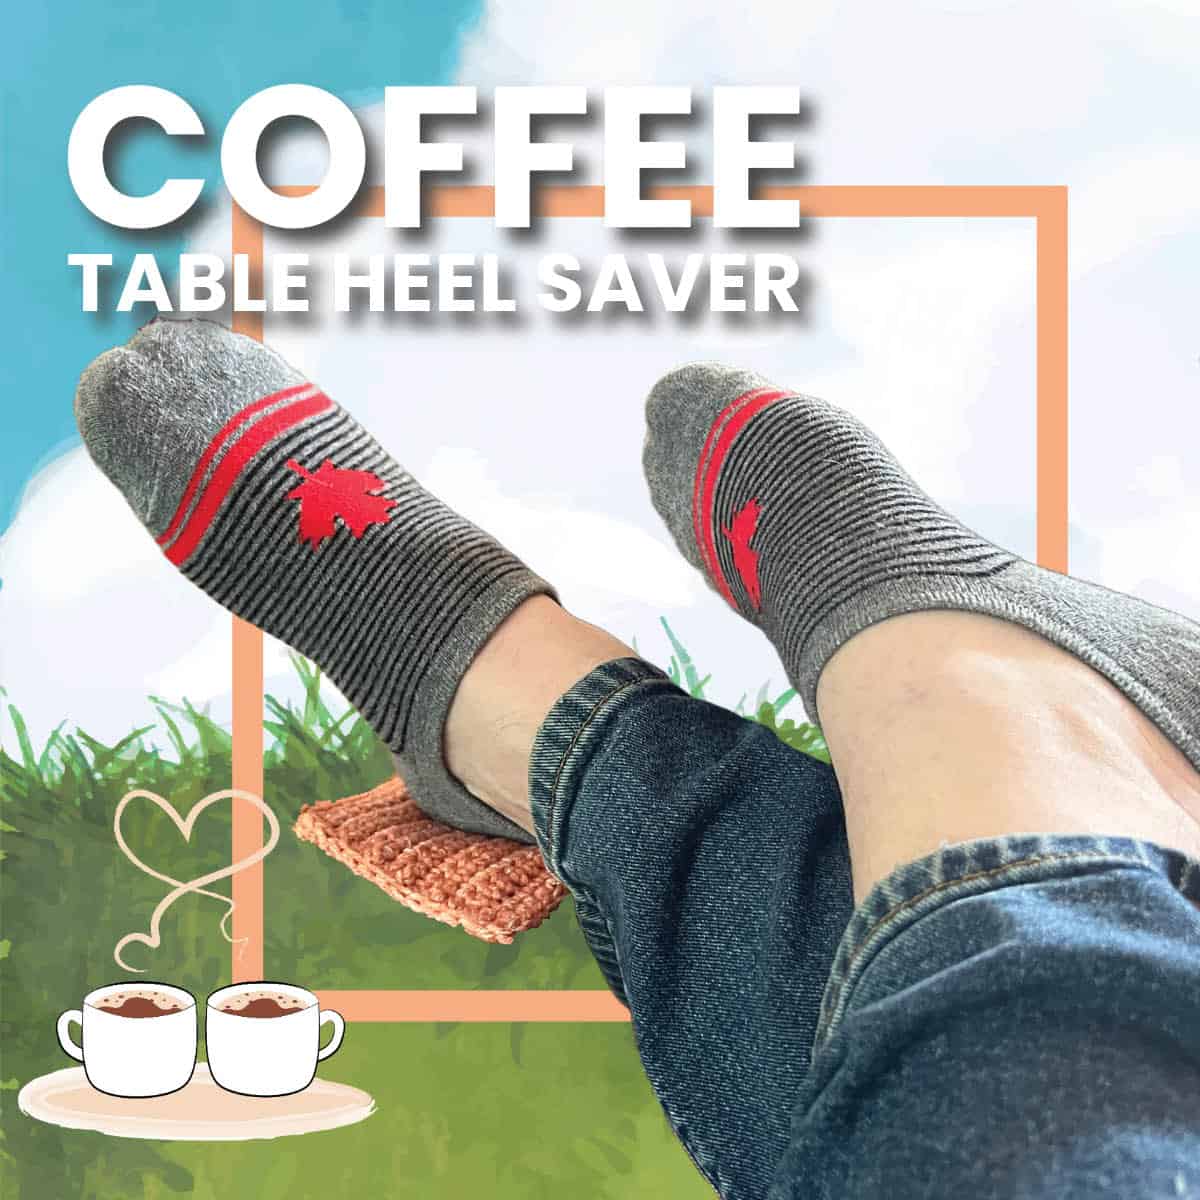 Coffee Table Heel Saver Pattern